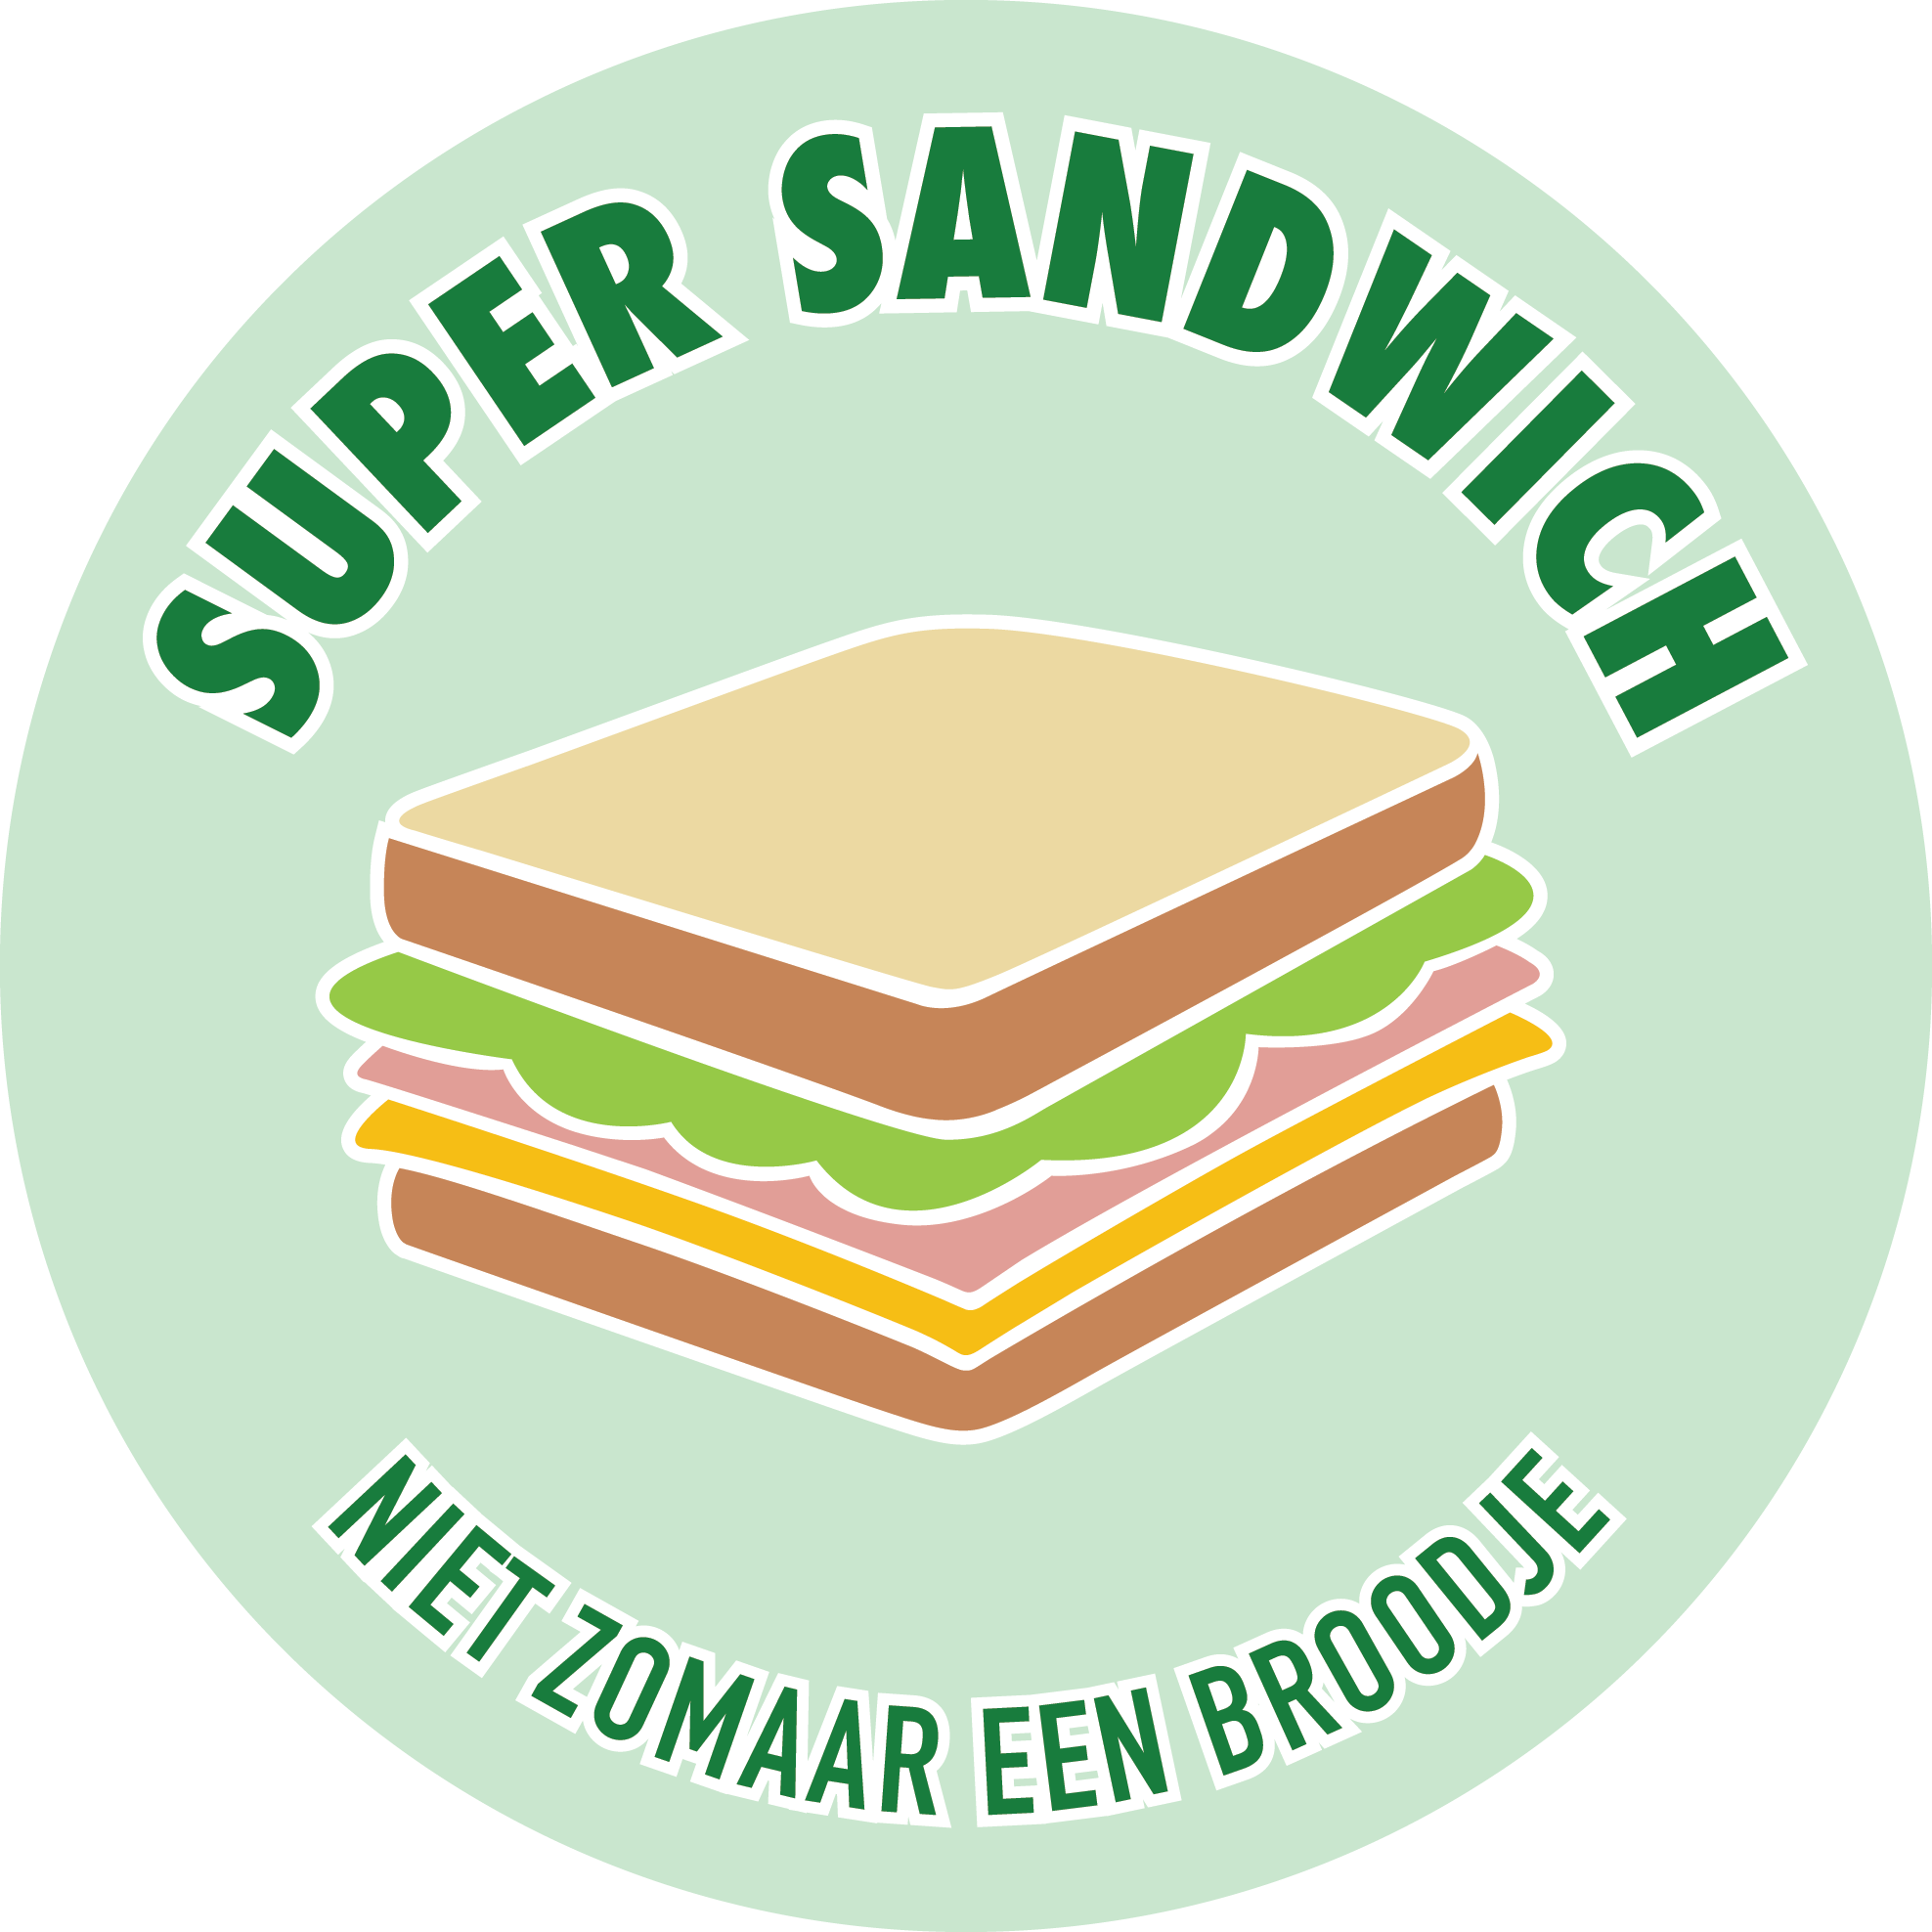 Super Sandwich